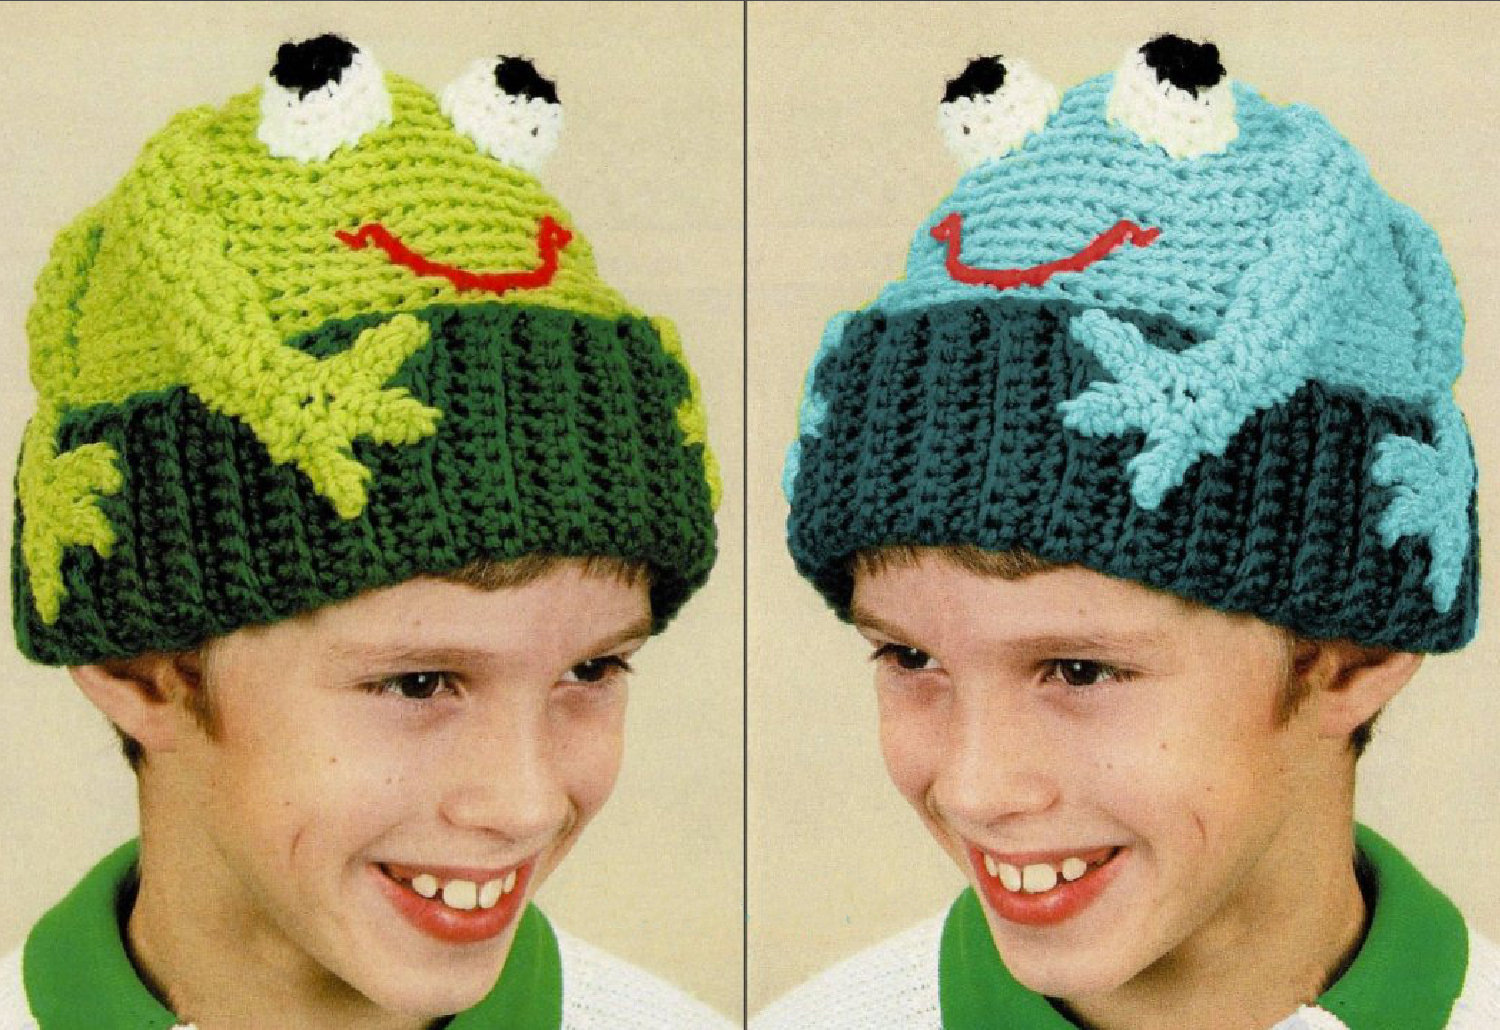 Frog Hat Knitting Pattern Vintage Crochet Pattern Kids To Adults Crocheted Frog Beanie Hat Pdf Instant Digital Download Fun Novelty Crochet Animal Hat 4 Ply